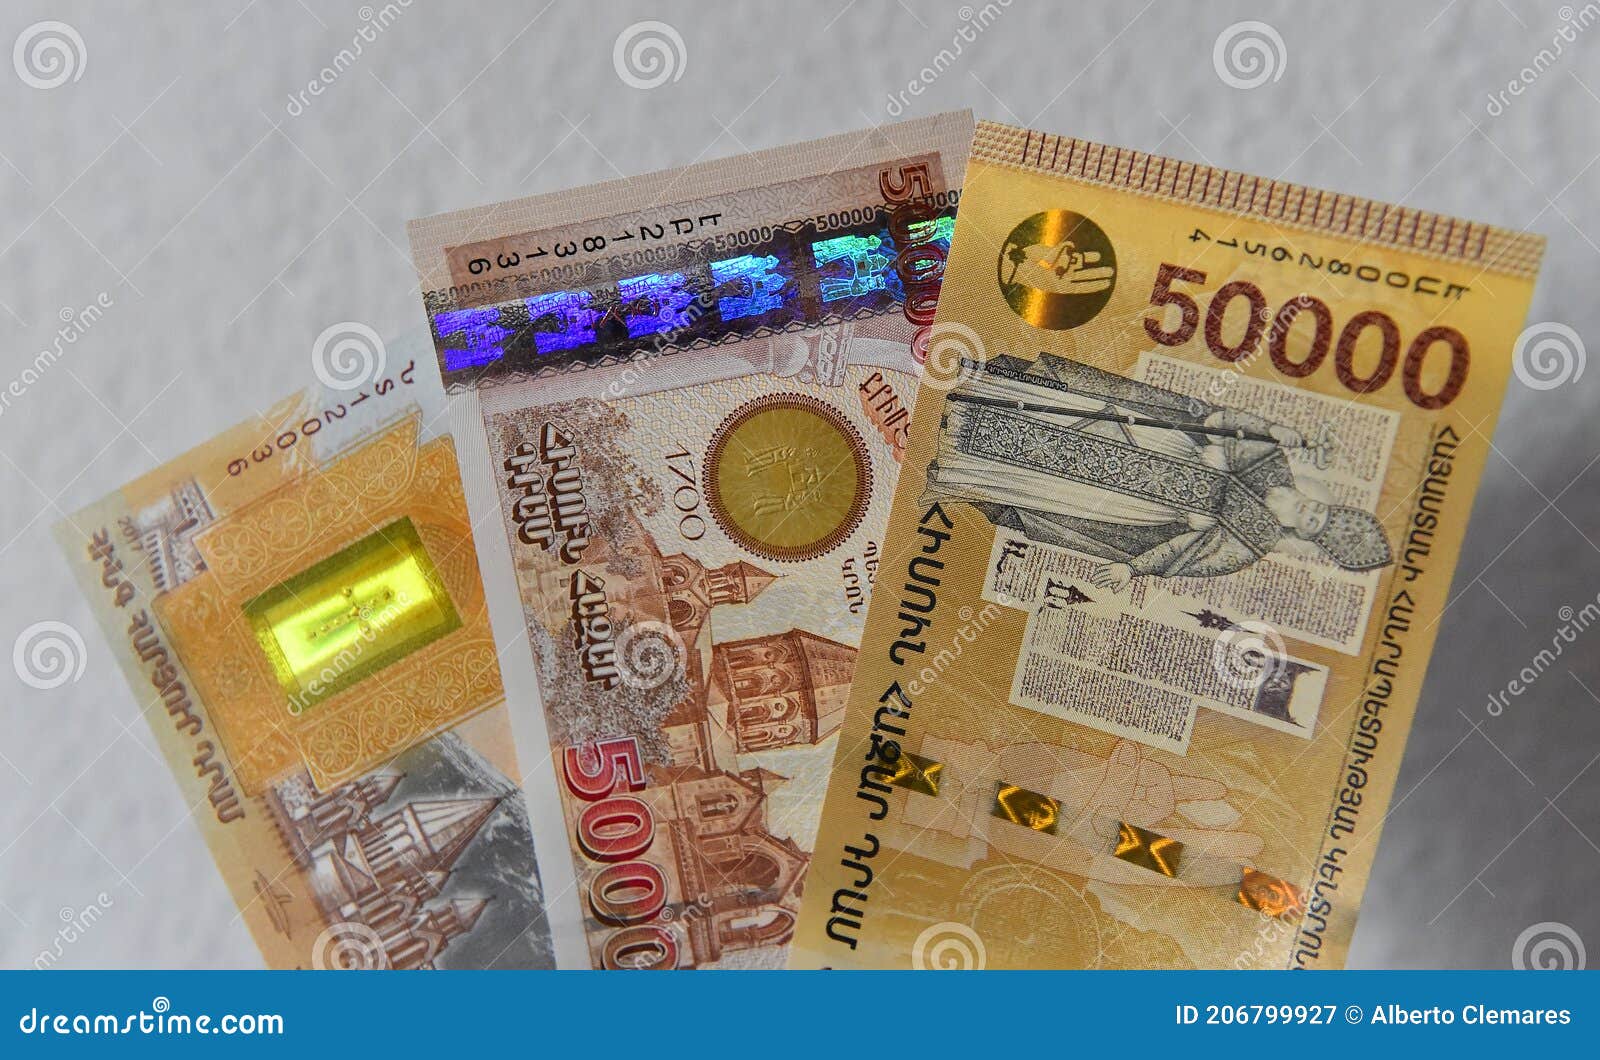 some tenge banknotes of armenia